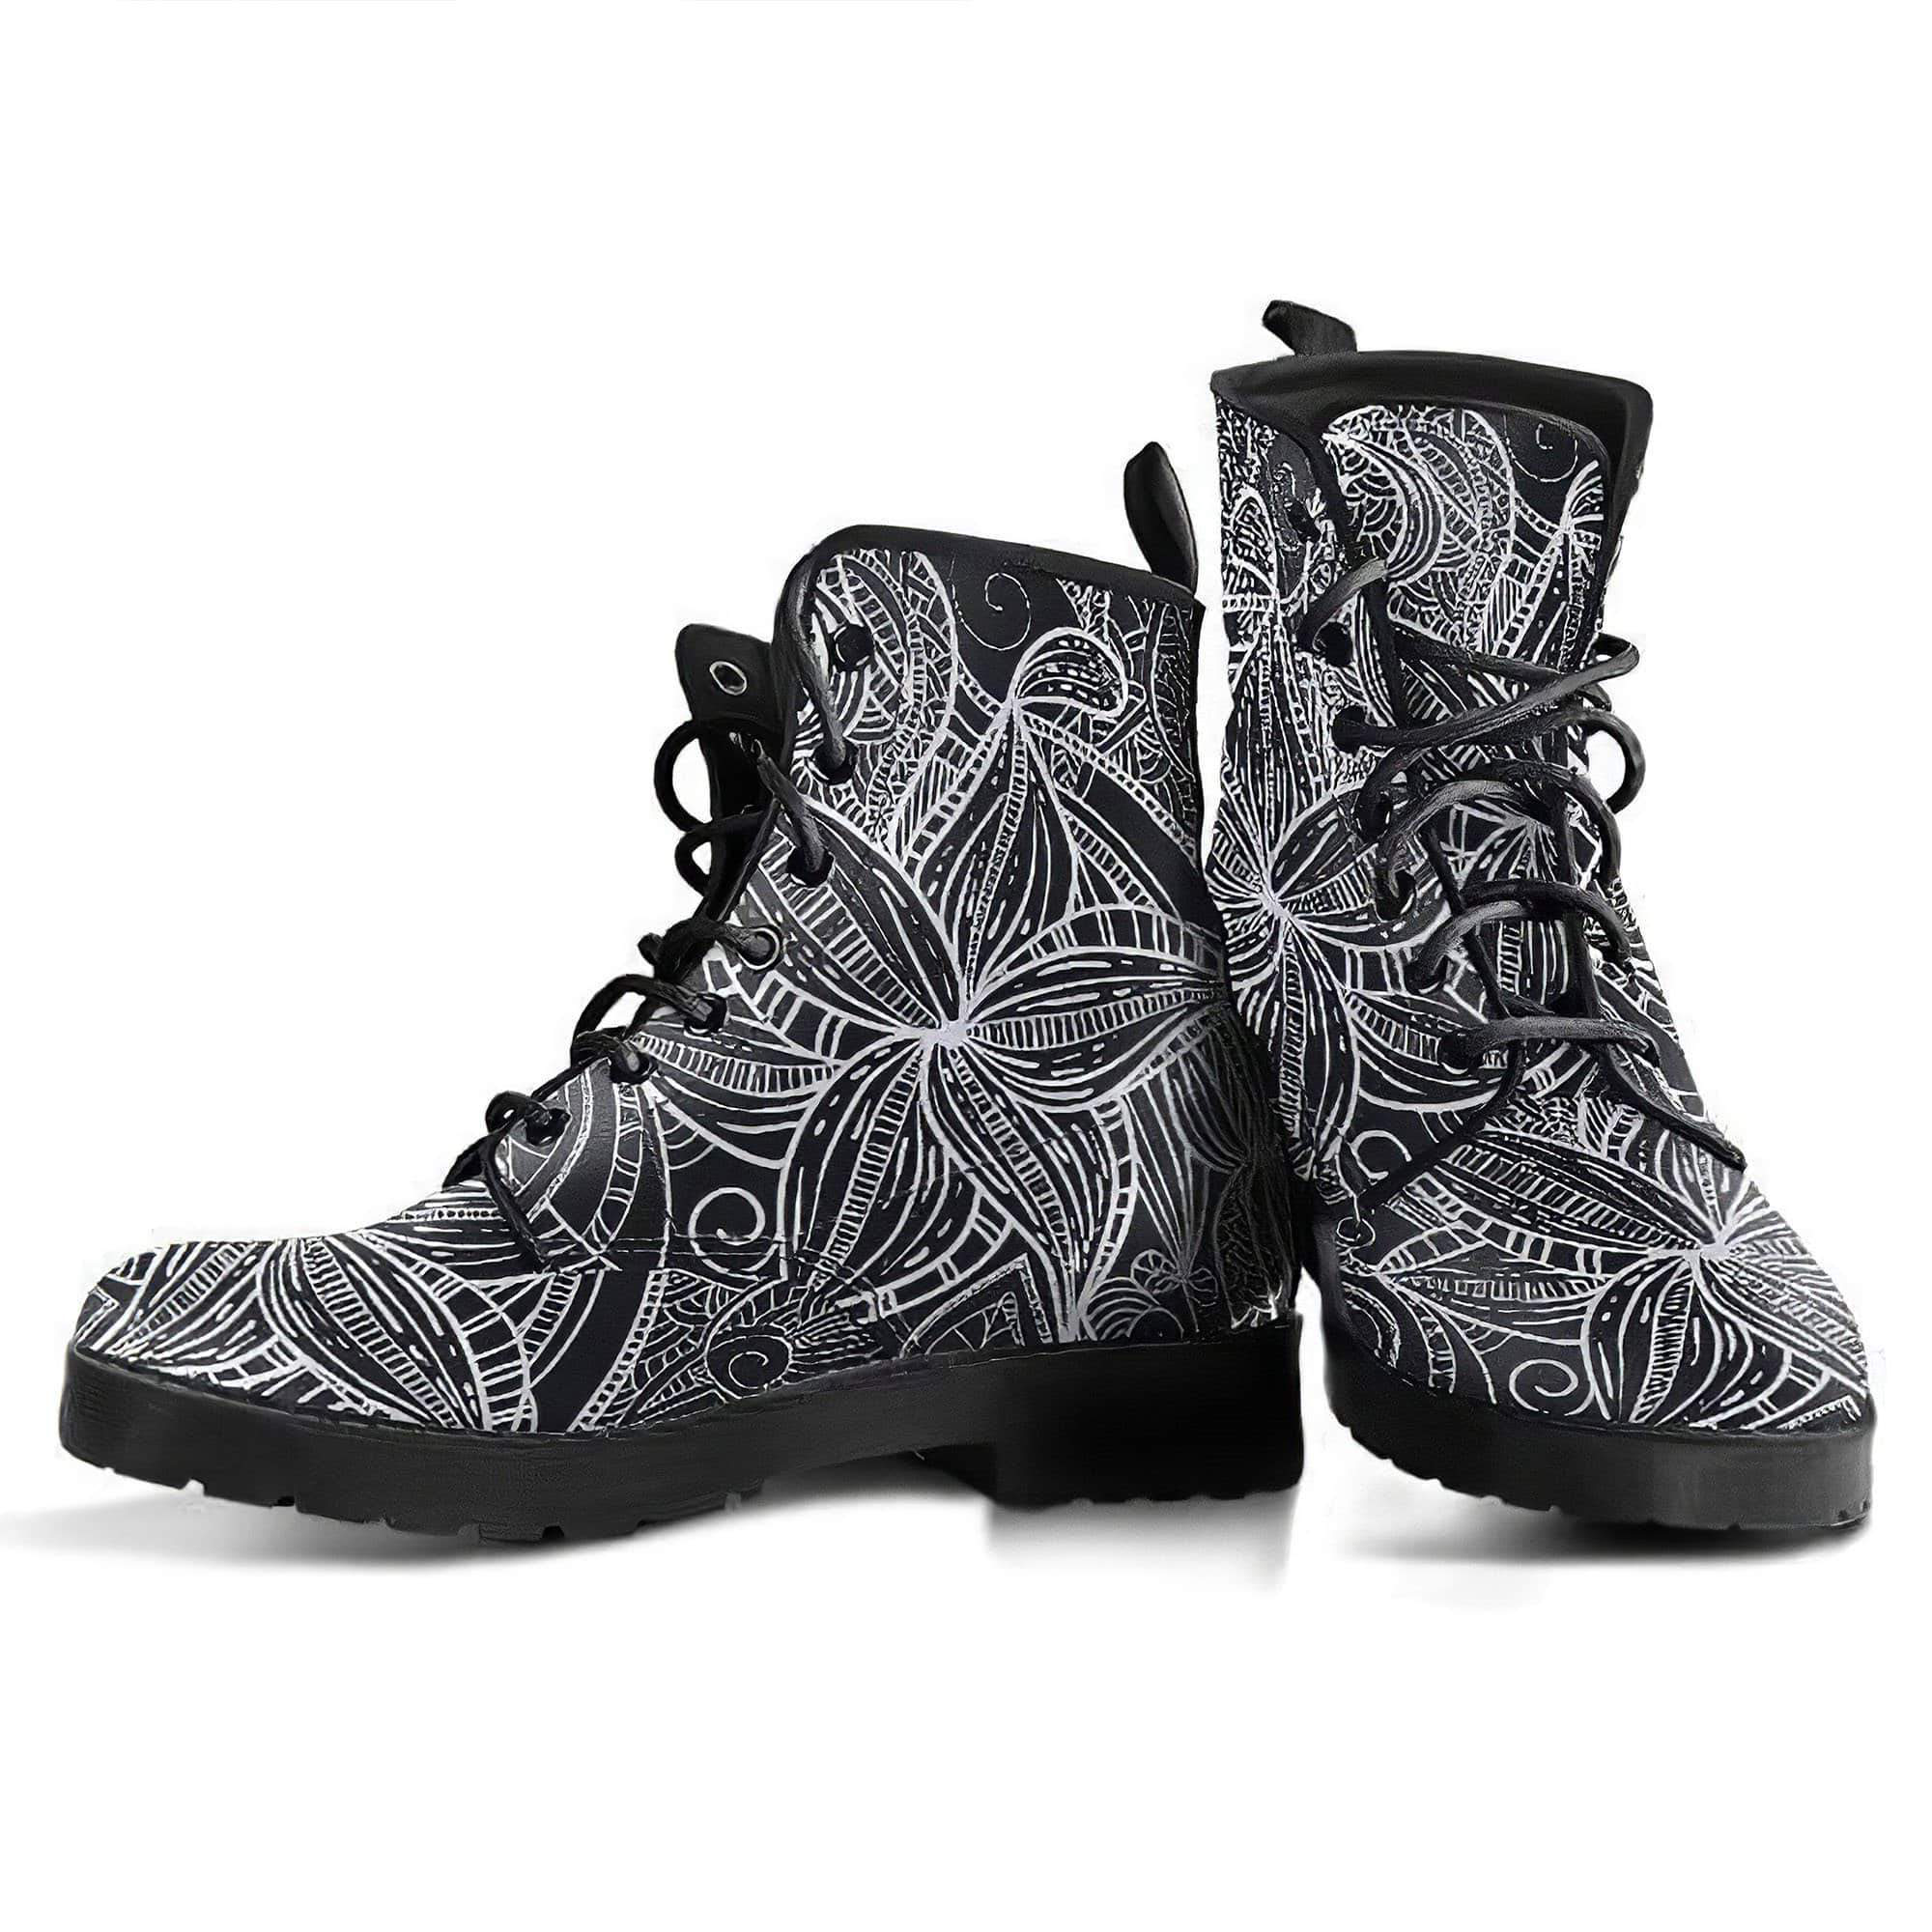 zen-3-handcrafted-boots-women-s-leather-boots-12051990183997.jpg